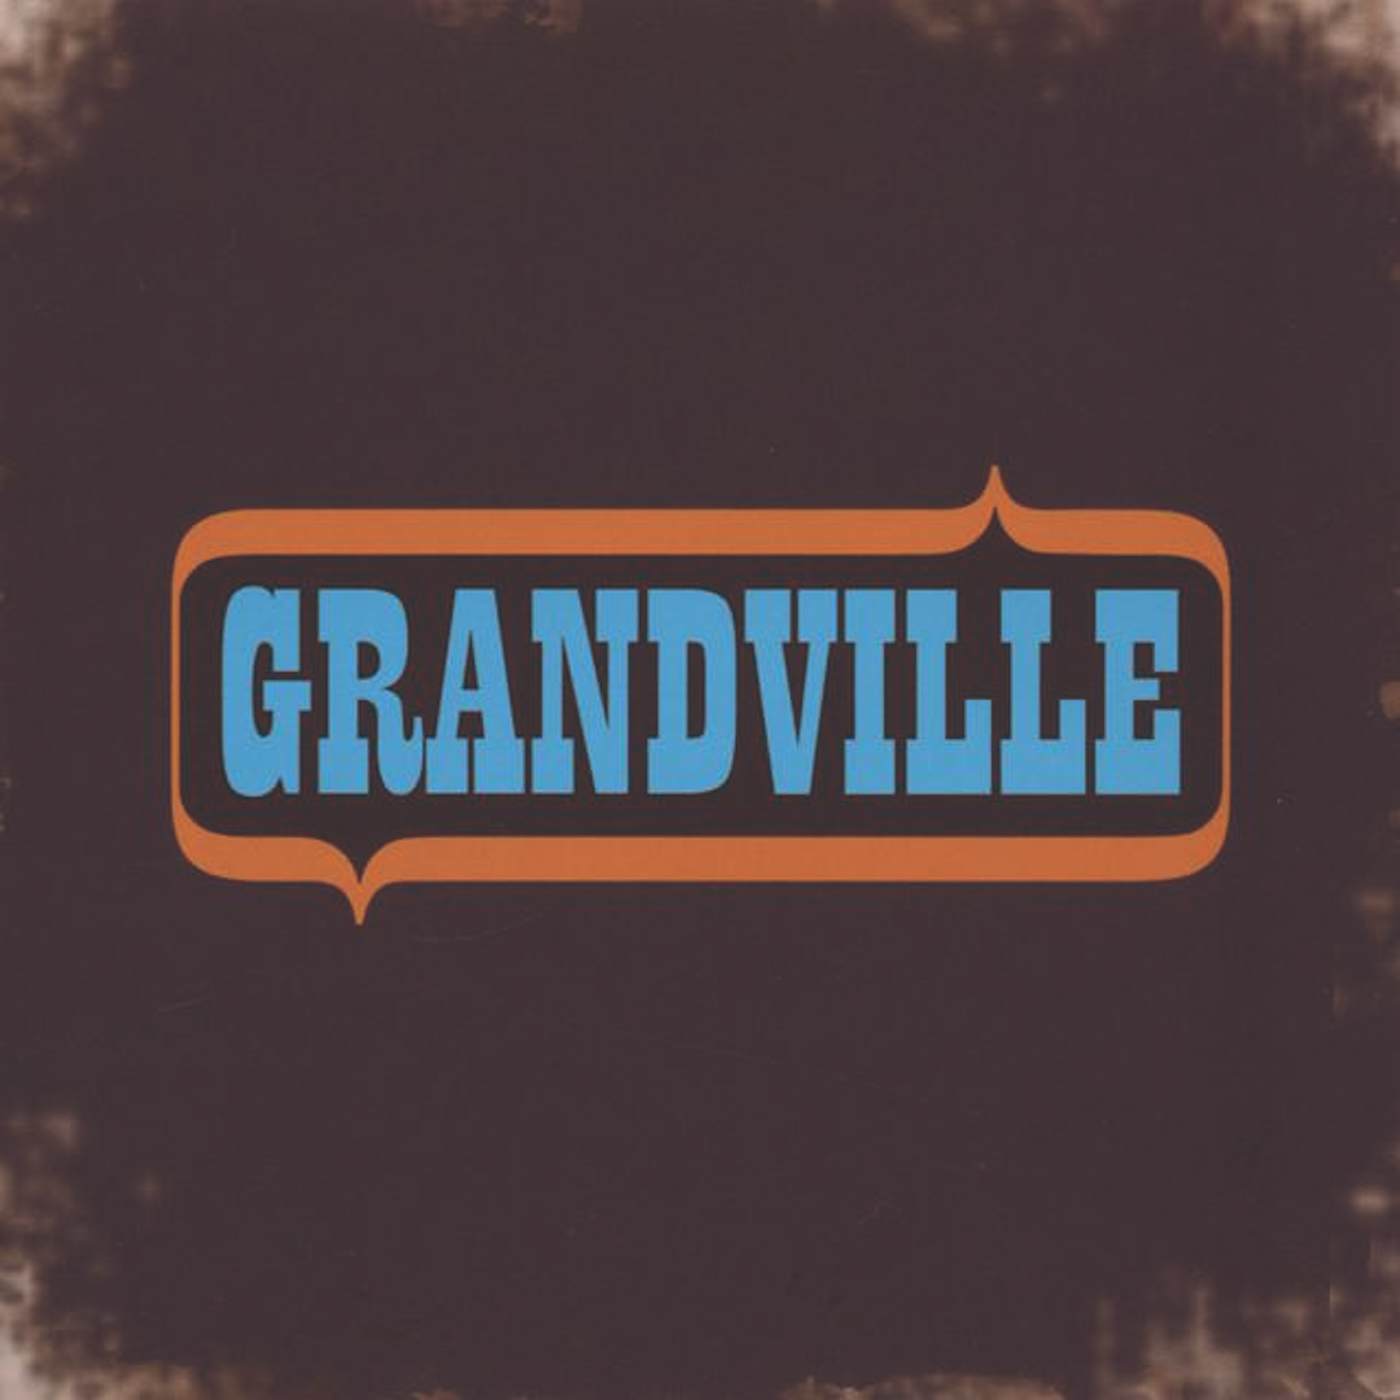 Grandville